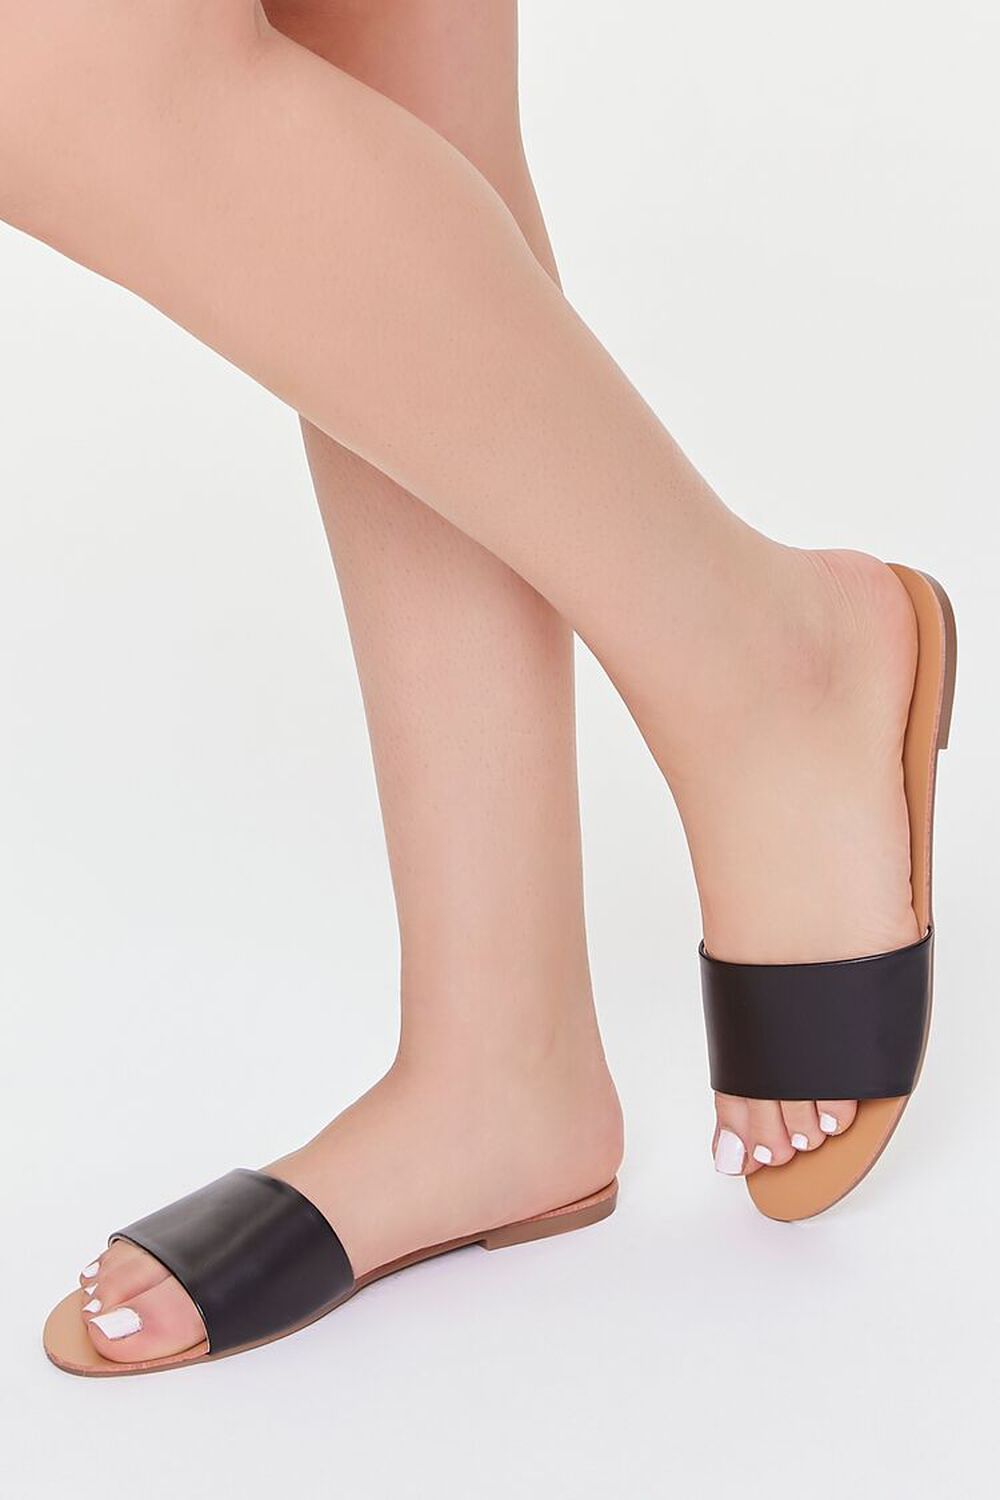 BLACK Faux Leather Slip-On Sandals, image 1